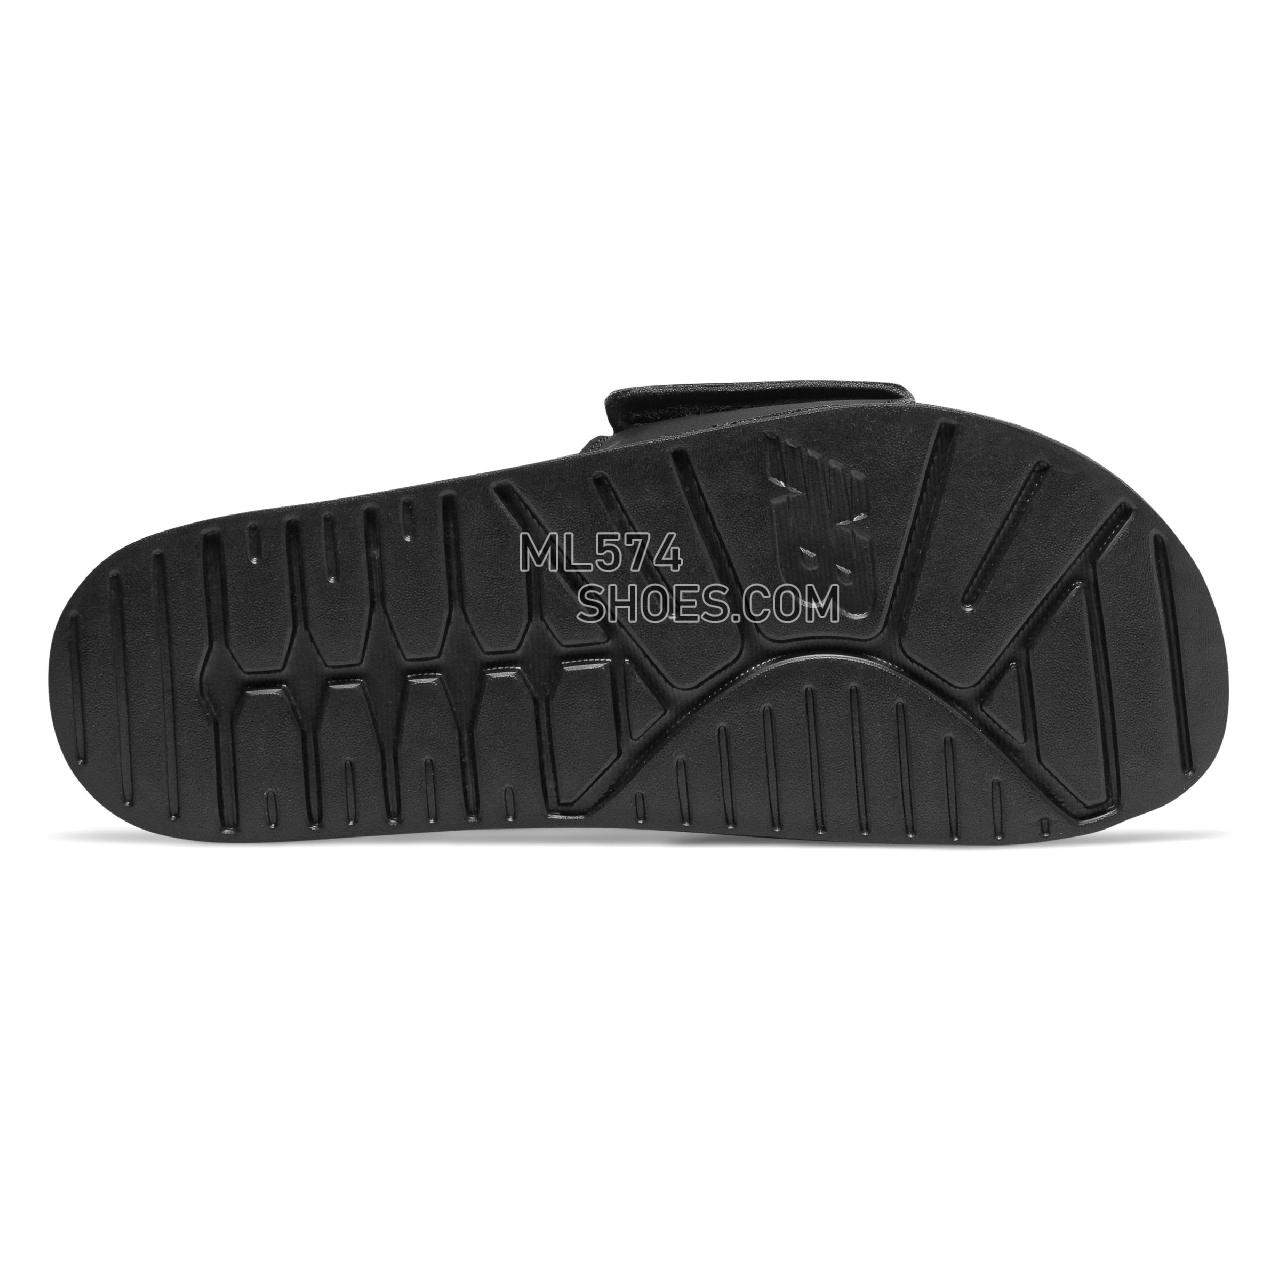 New Balance 200 Adjustable - Men's Flip Flops - Black with White - SMA200B1